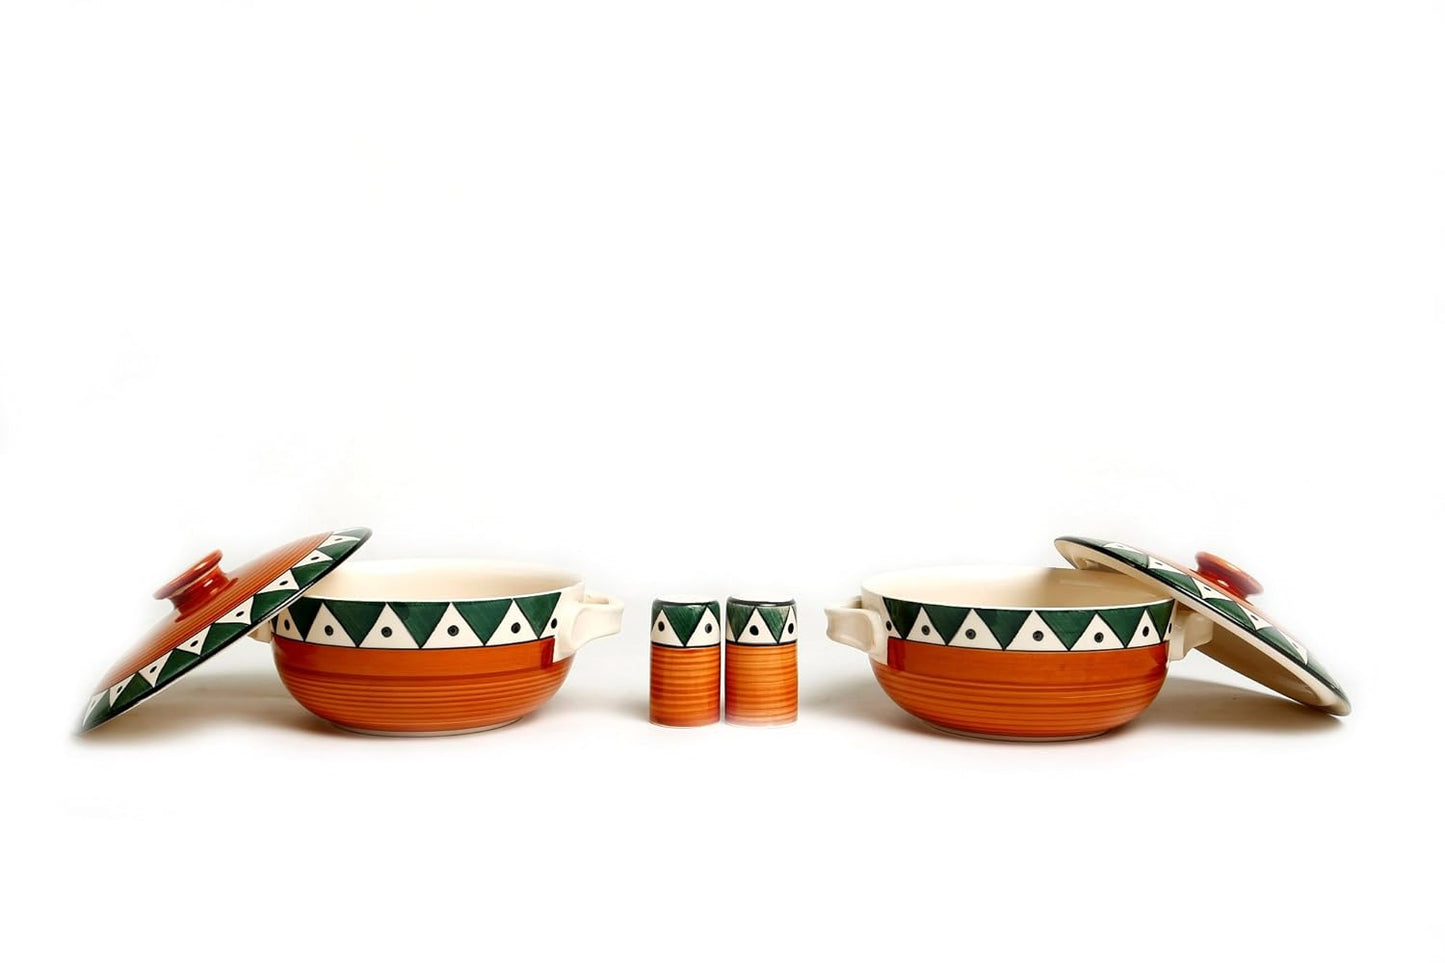 Caffeine Ceramic Handmade Green and Orange Dinner Set (37 pcs) - Caffeine Premium Stoneware